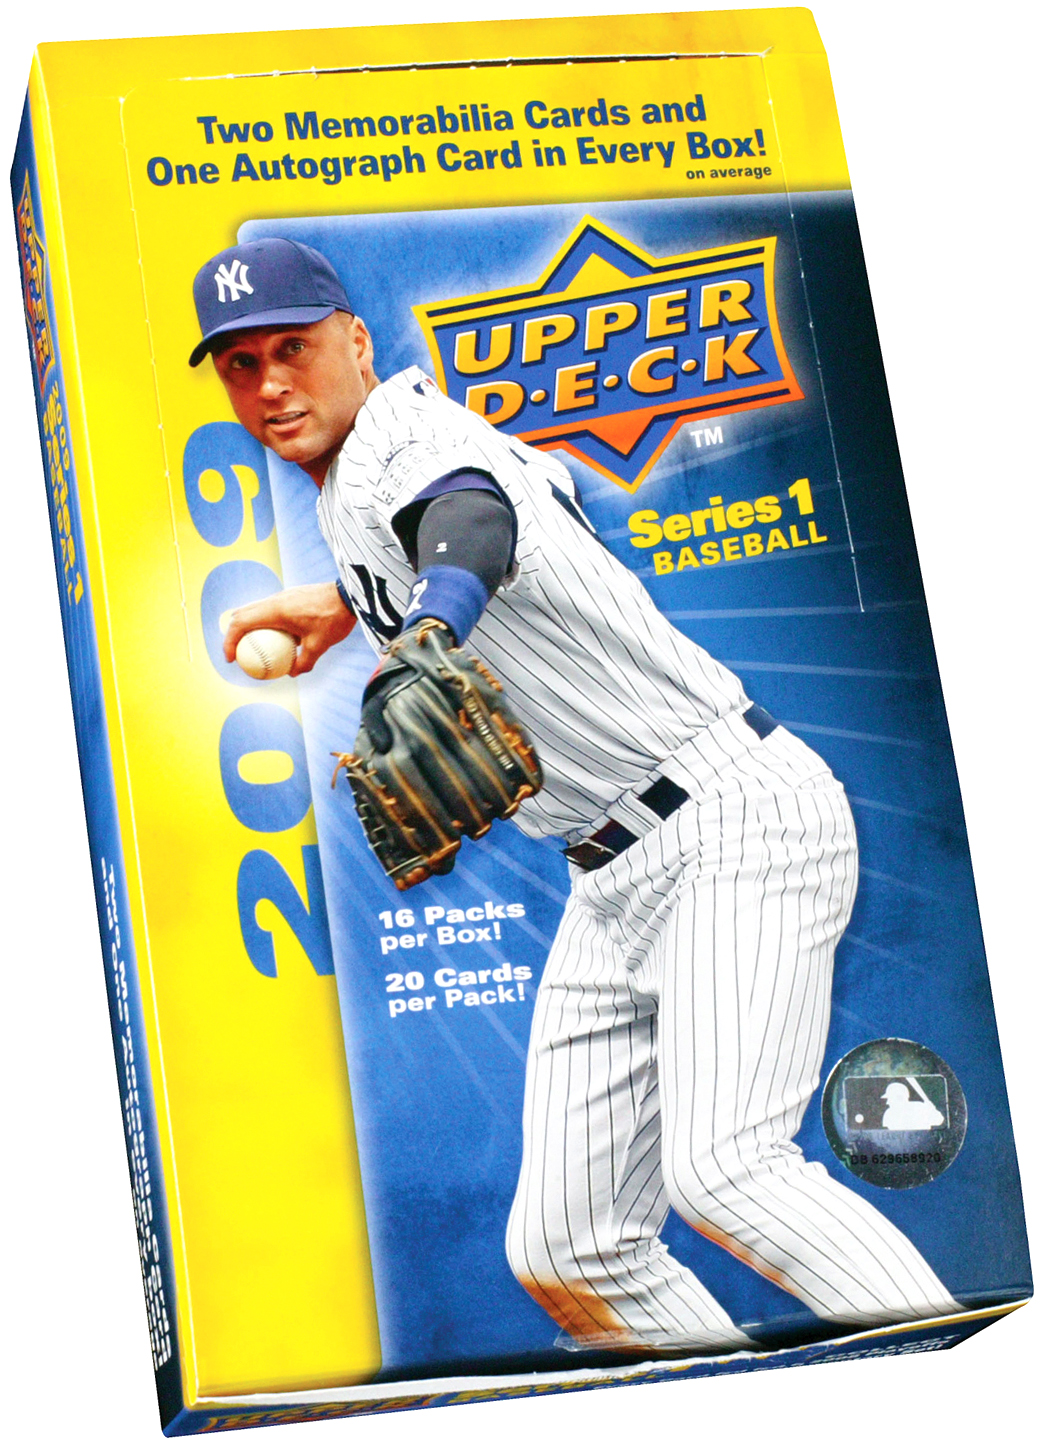 2009 Upper Deck Baseball Hobby Box Series 1 card image